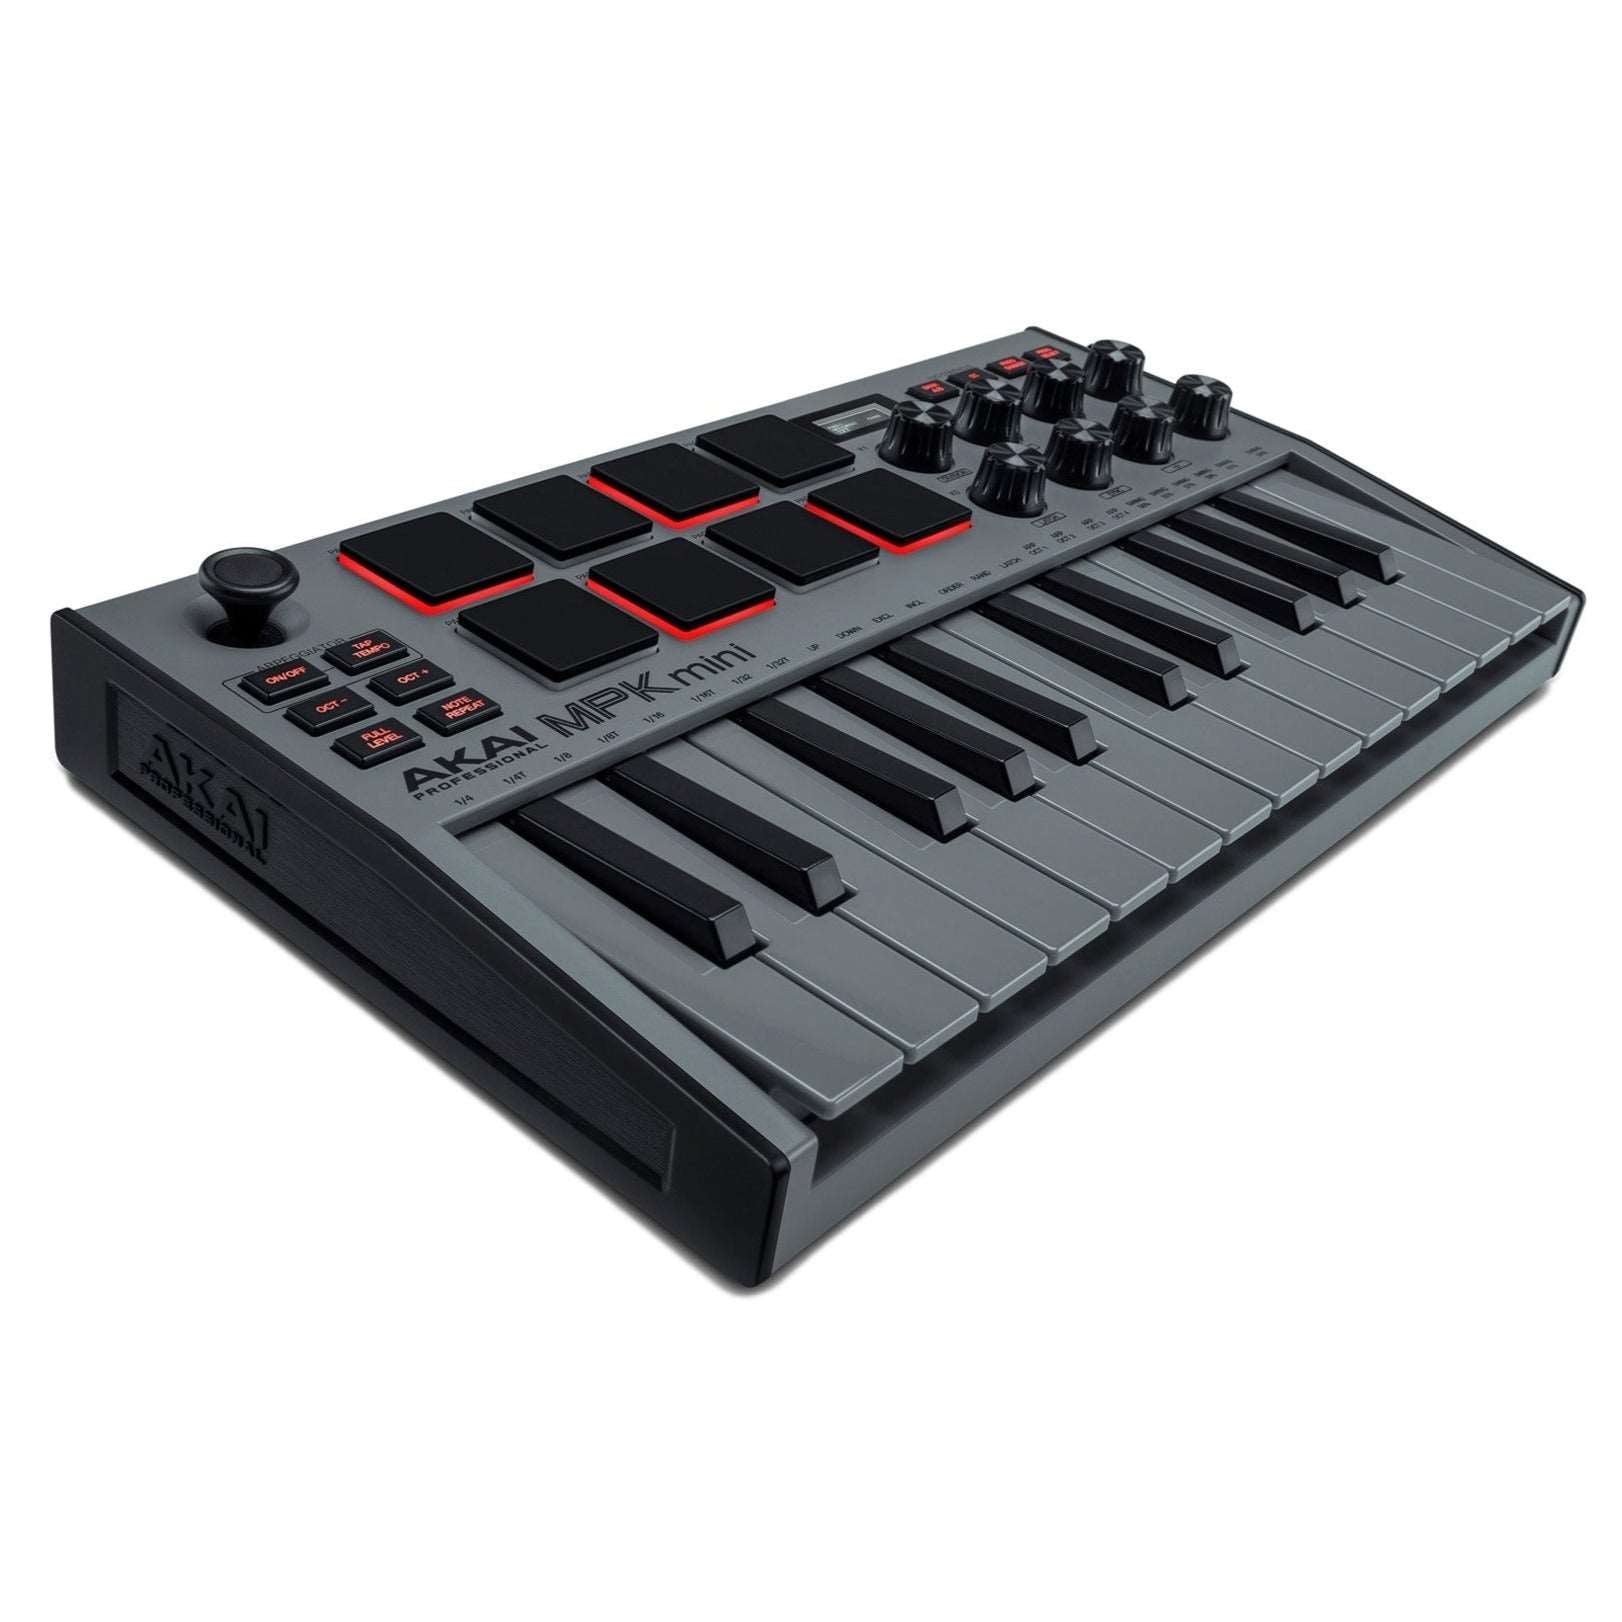 Akai MPK Mini Mk3 Compact Keyboard Controller, Grey Zoso Music